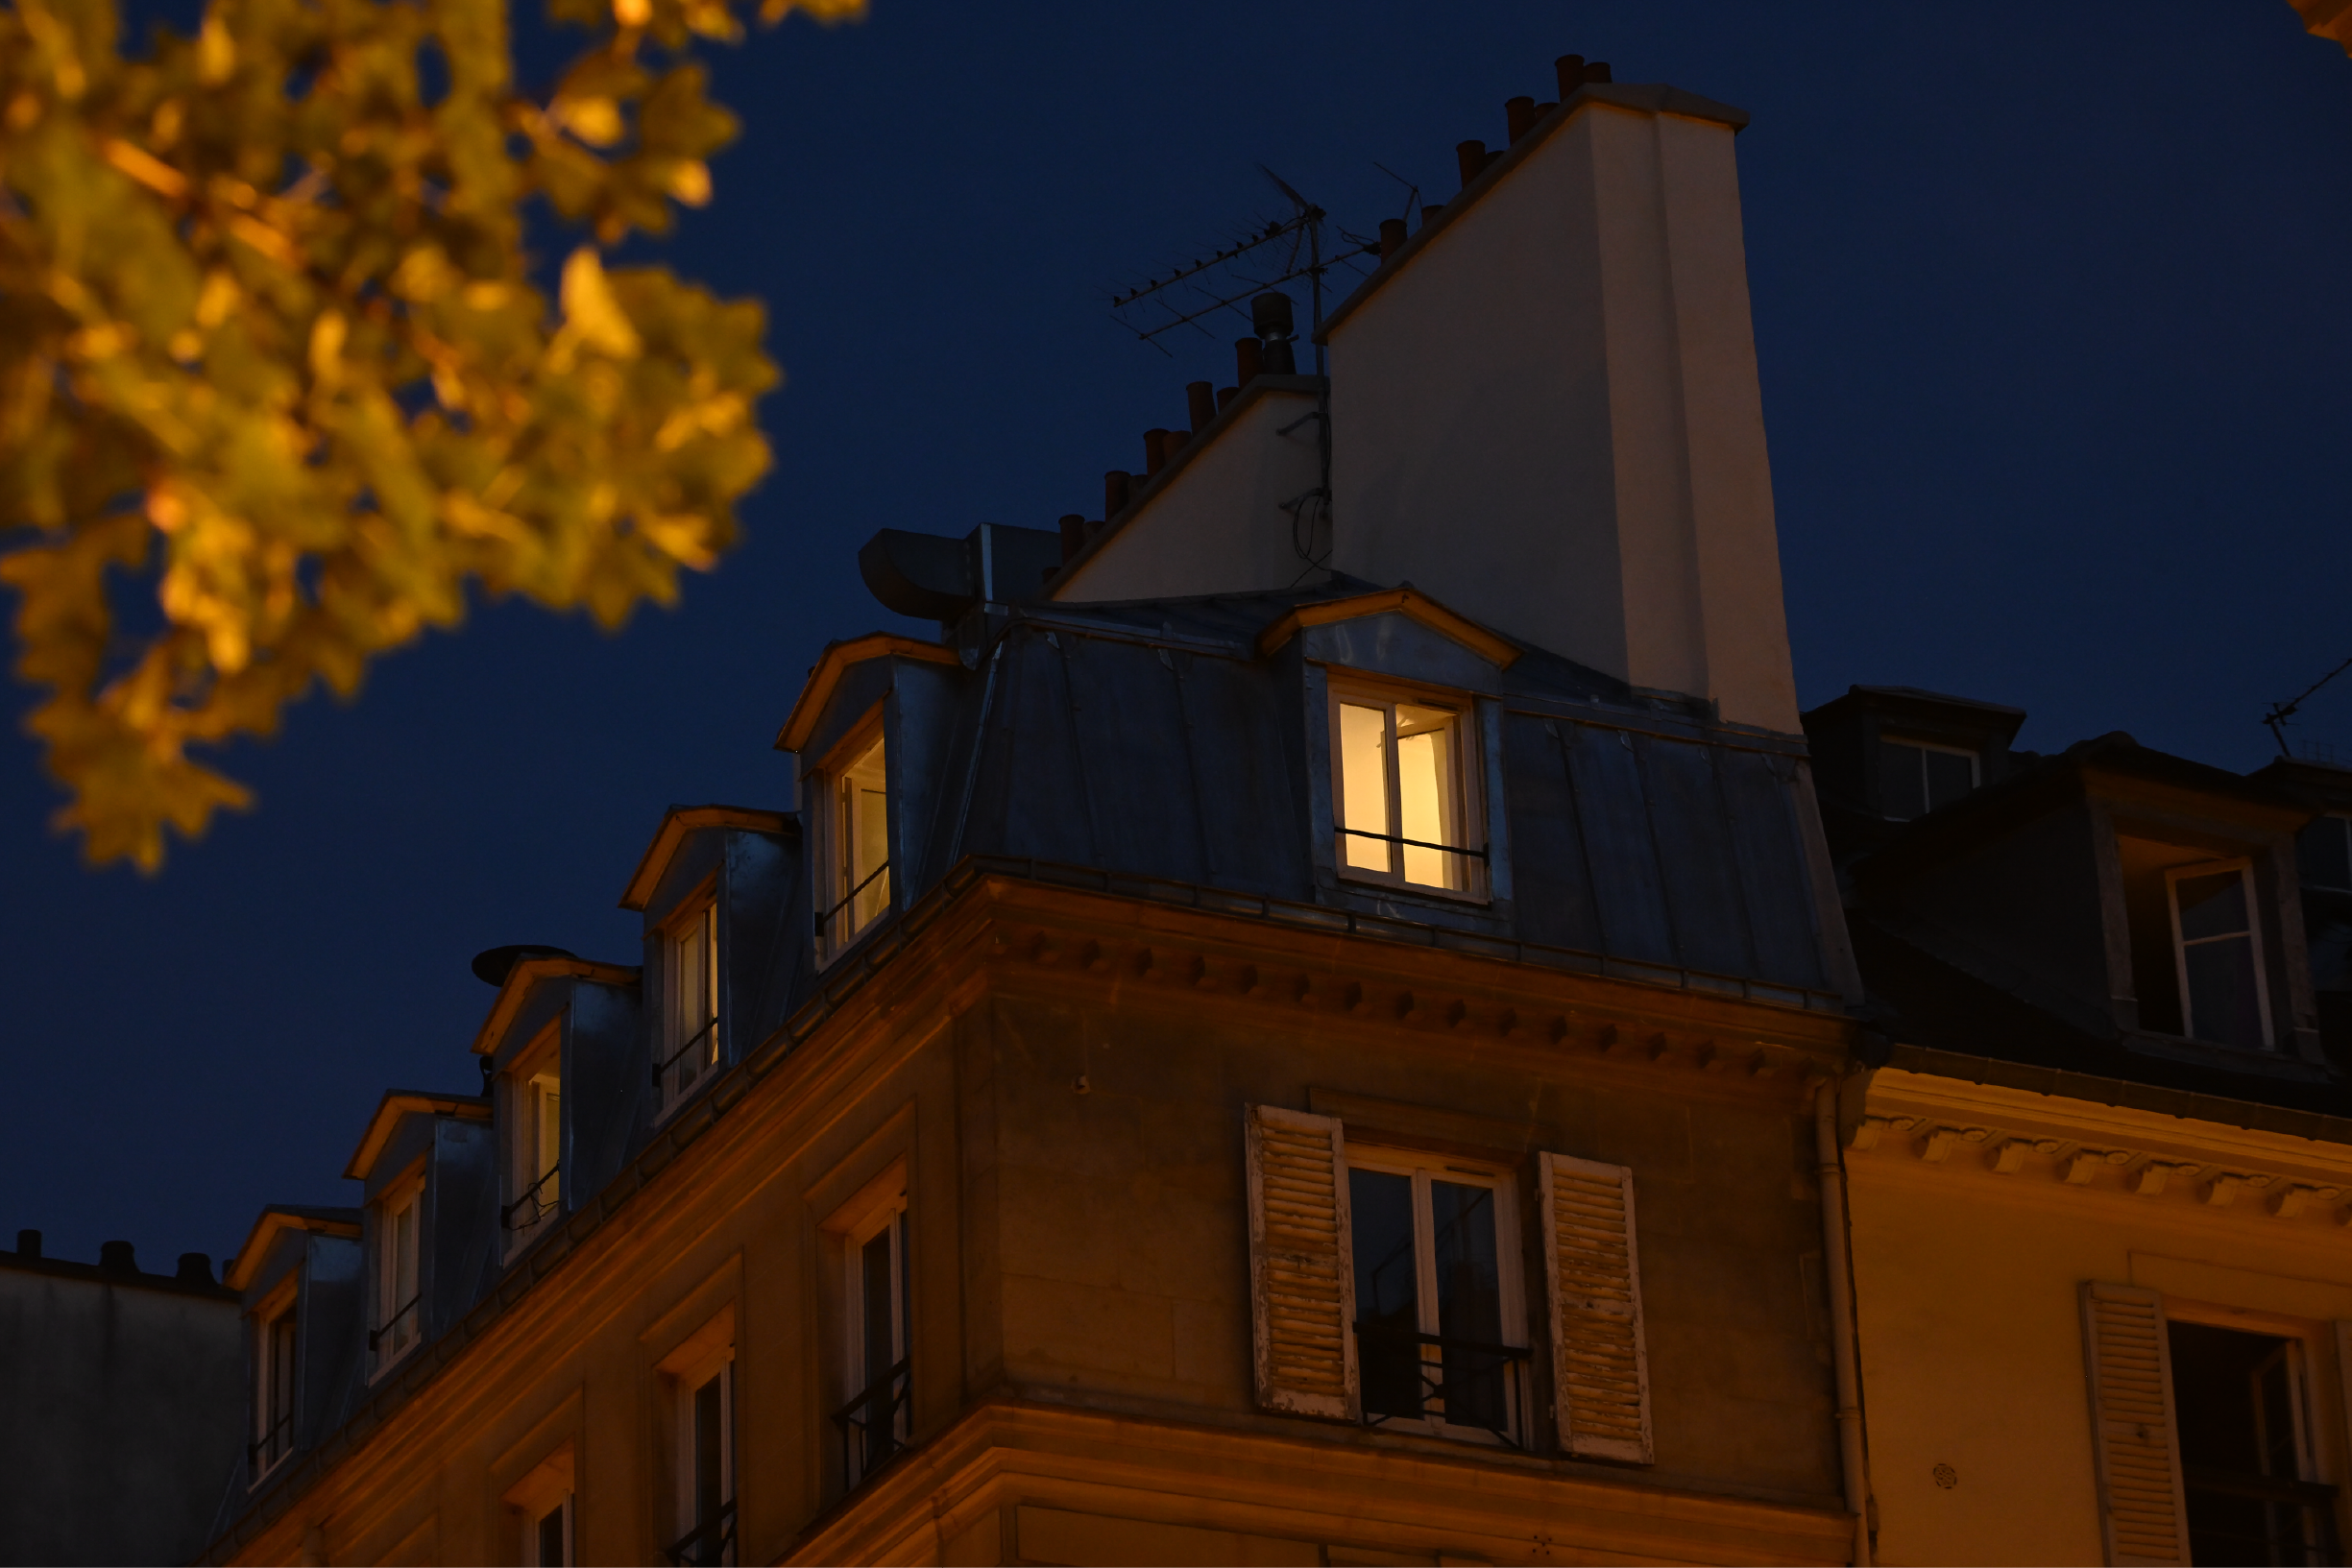 Apartment Window at Night | Nikon Cameras, Lenses & Accessories